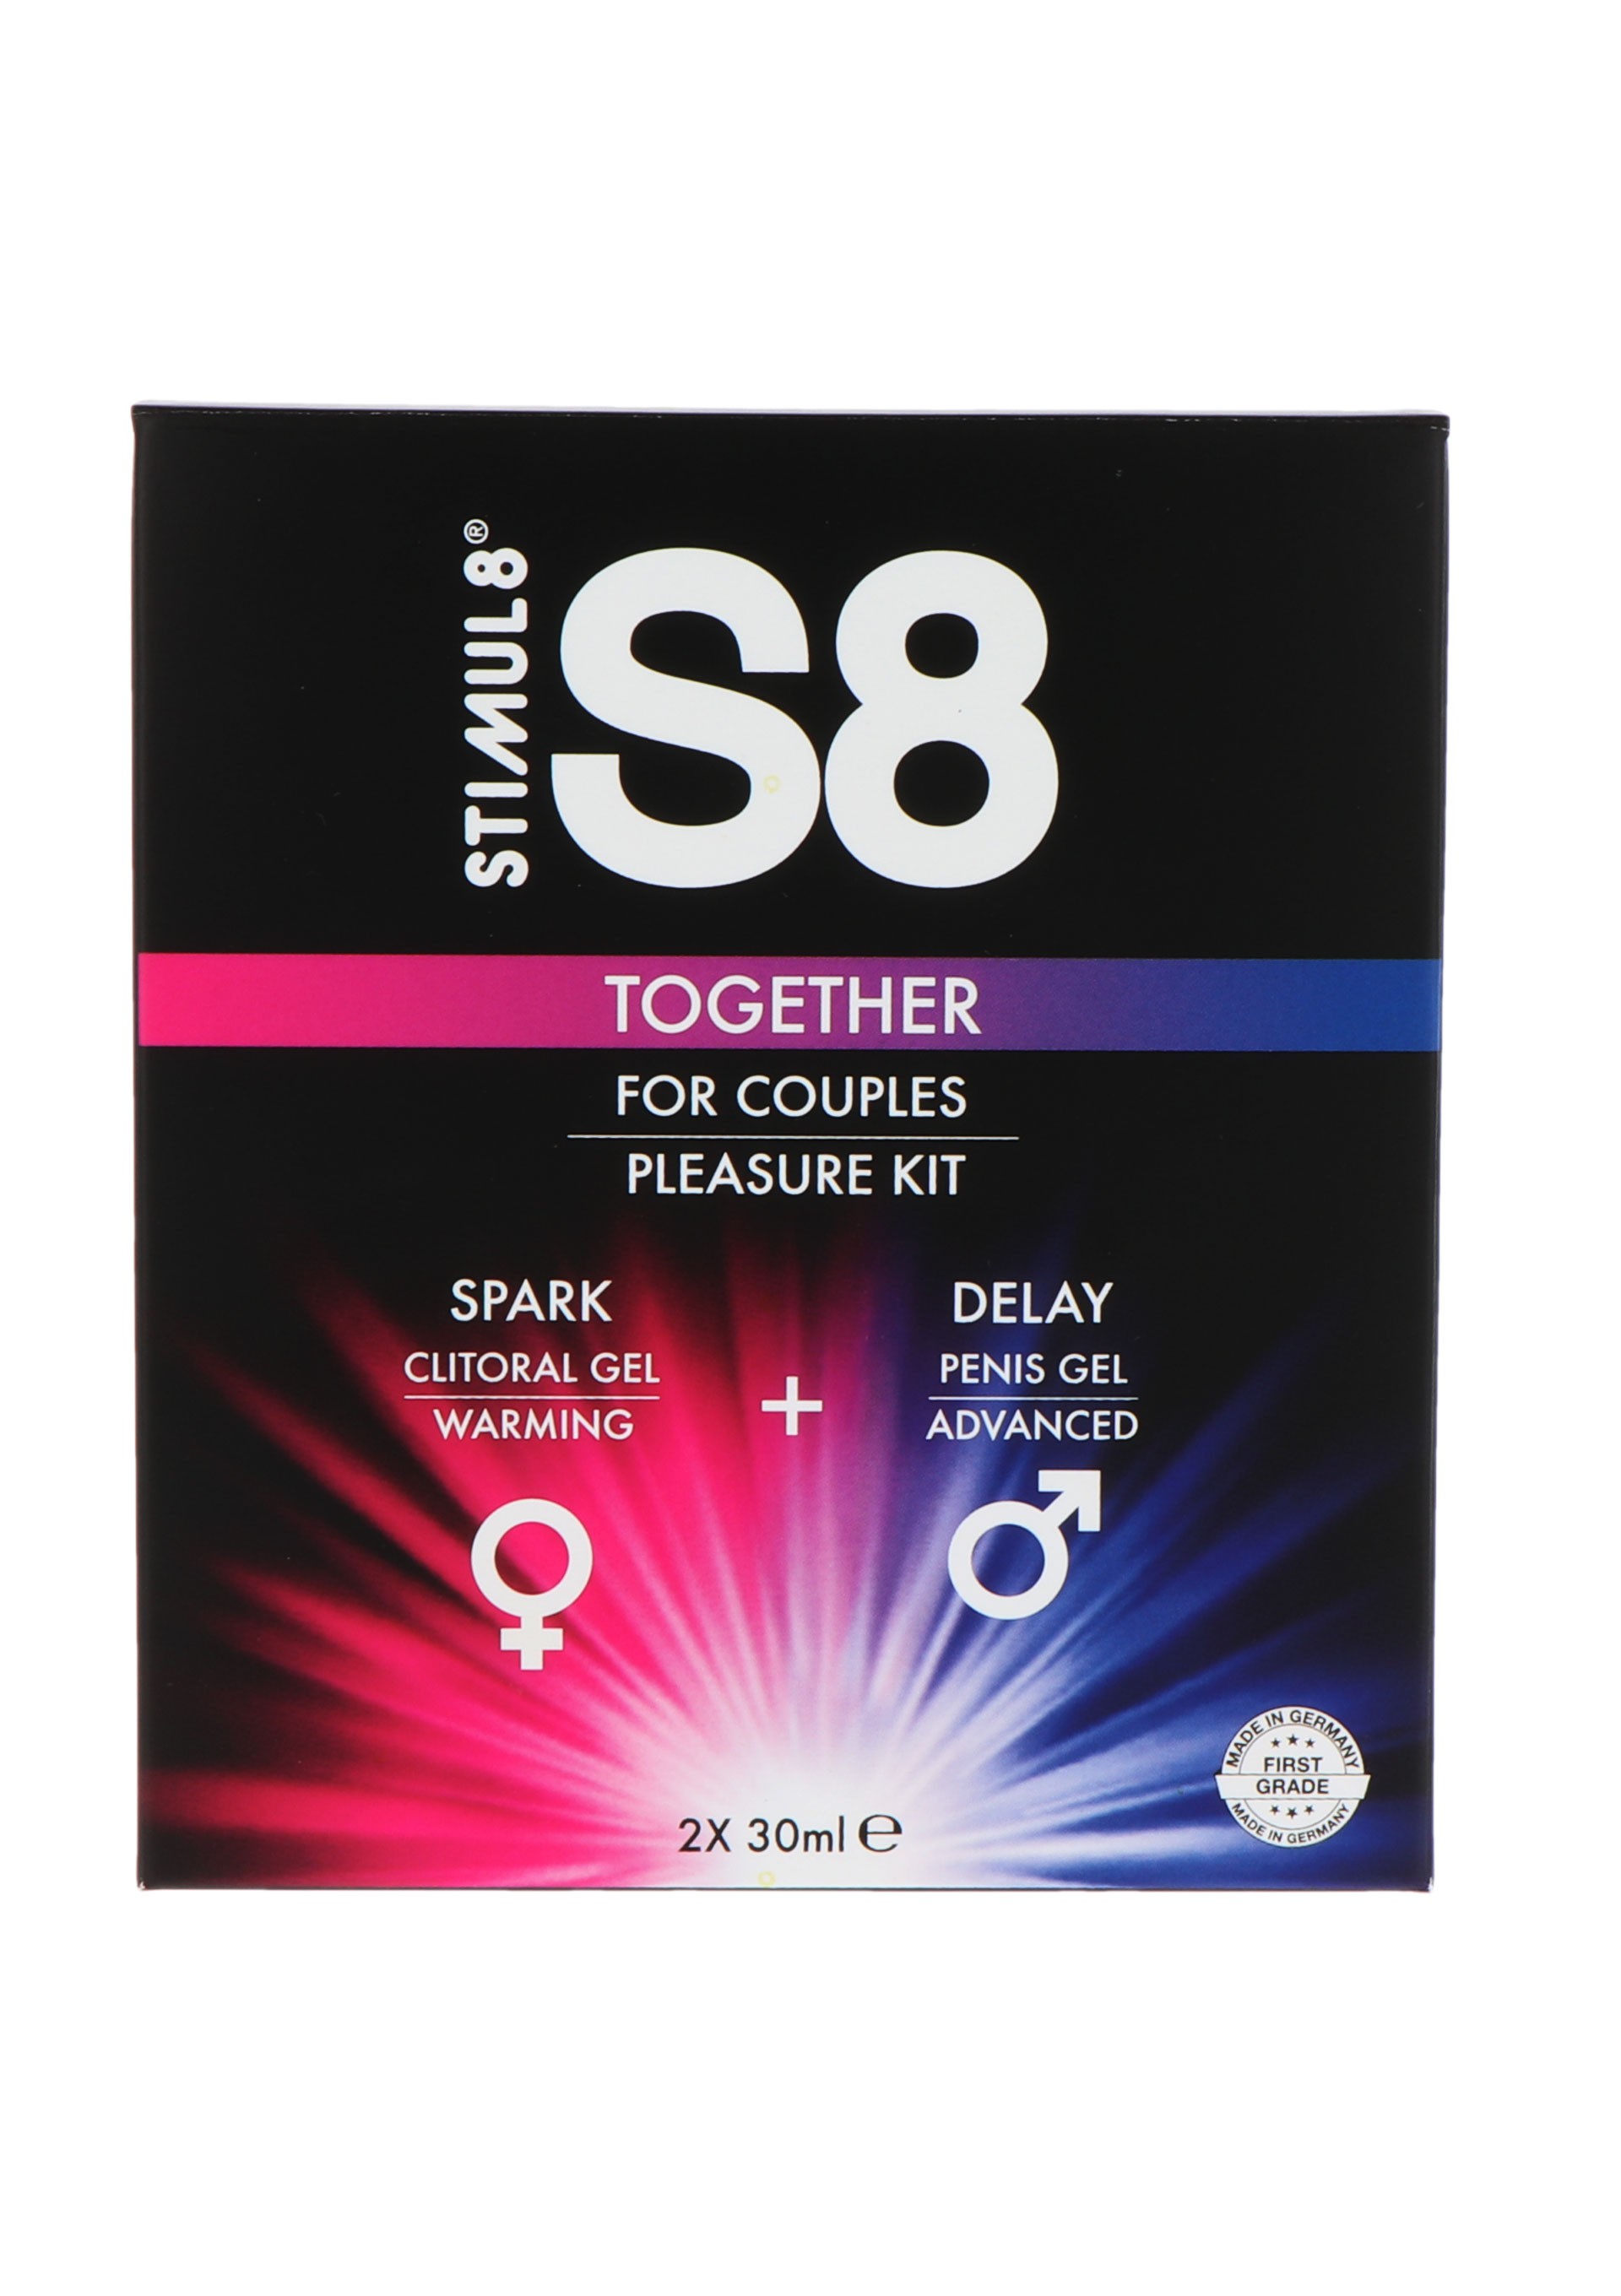 S8 Together Kit Delay jel ve Klitoral Jel 2 li Paket